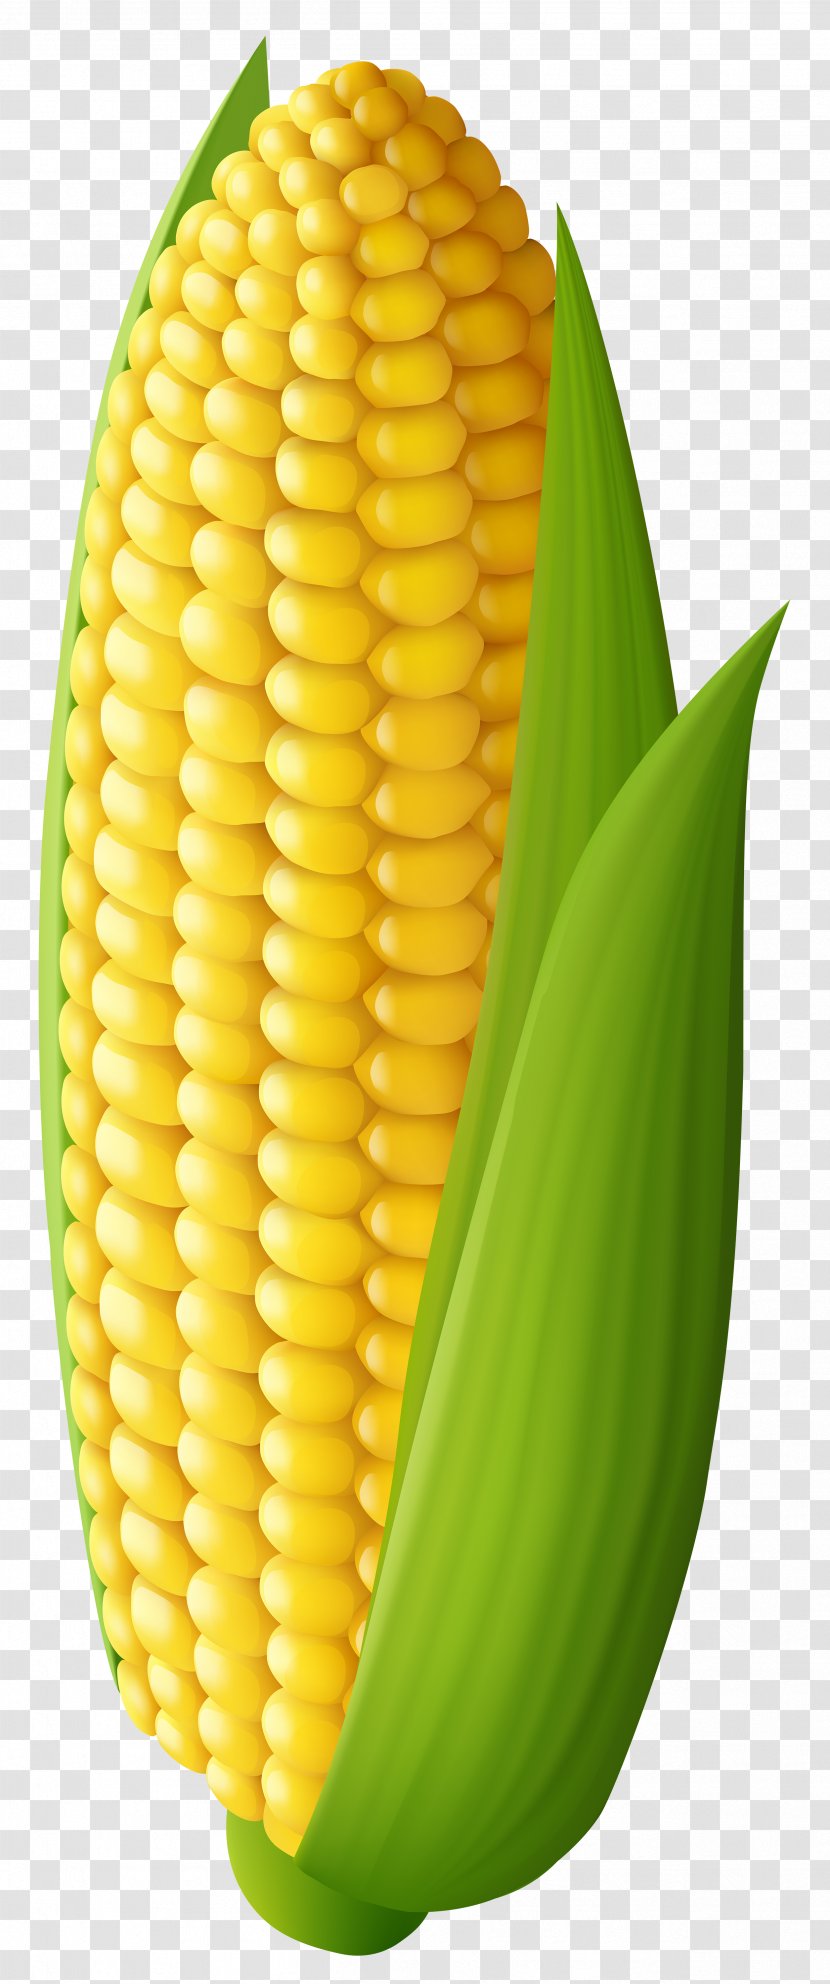 Corn On The Cob Maize Clip Art - Produce - Transparent Image Transparent PNG